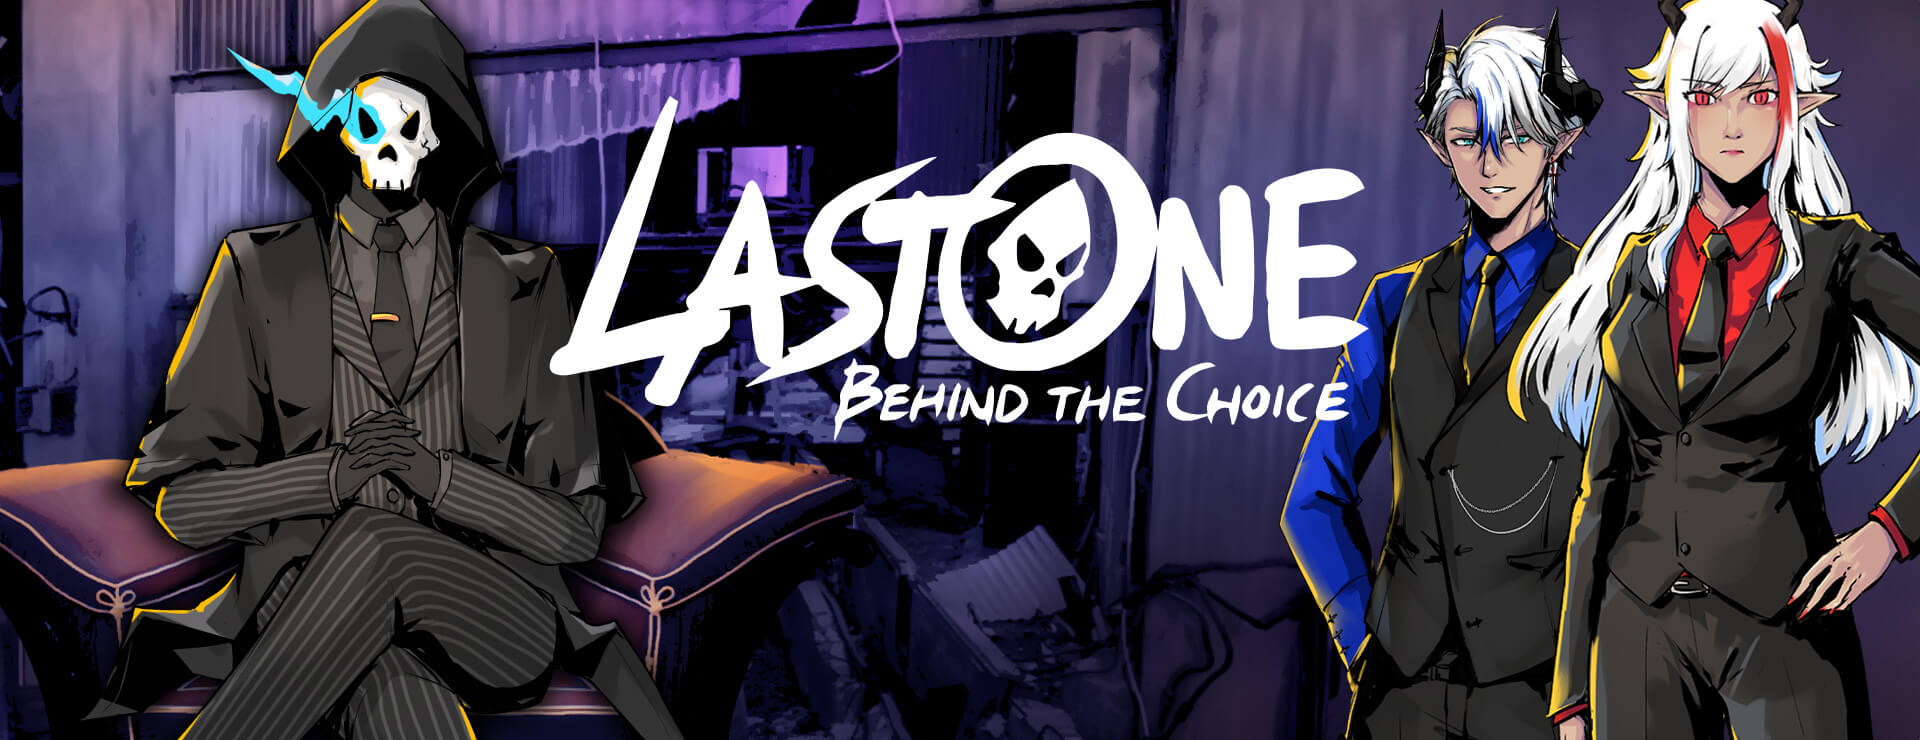 Lastone: Behind the Choice - Visual Novel Game